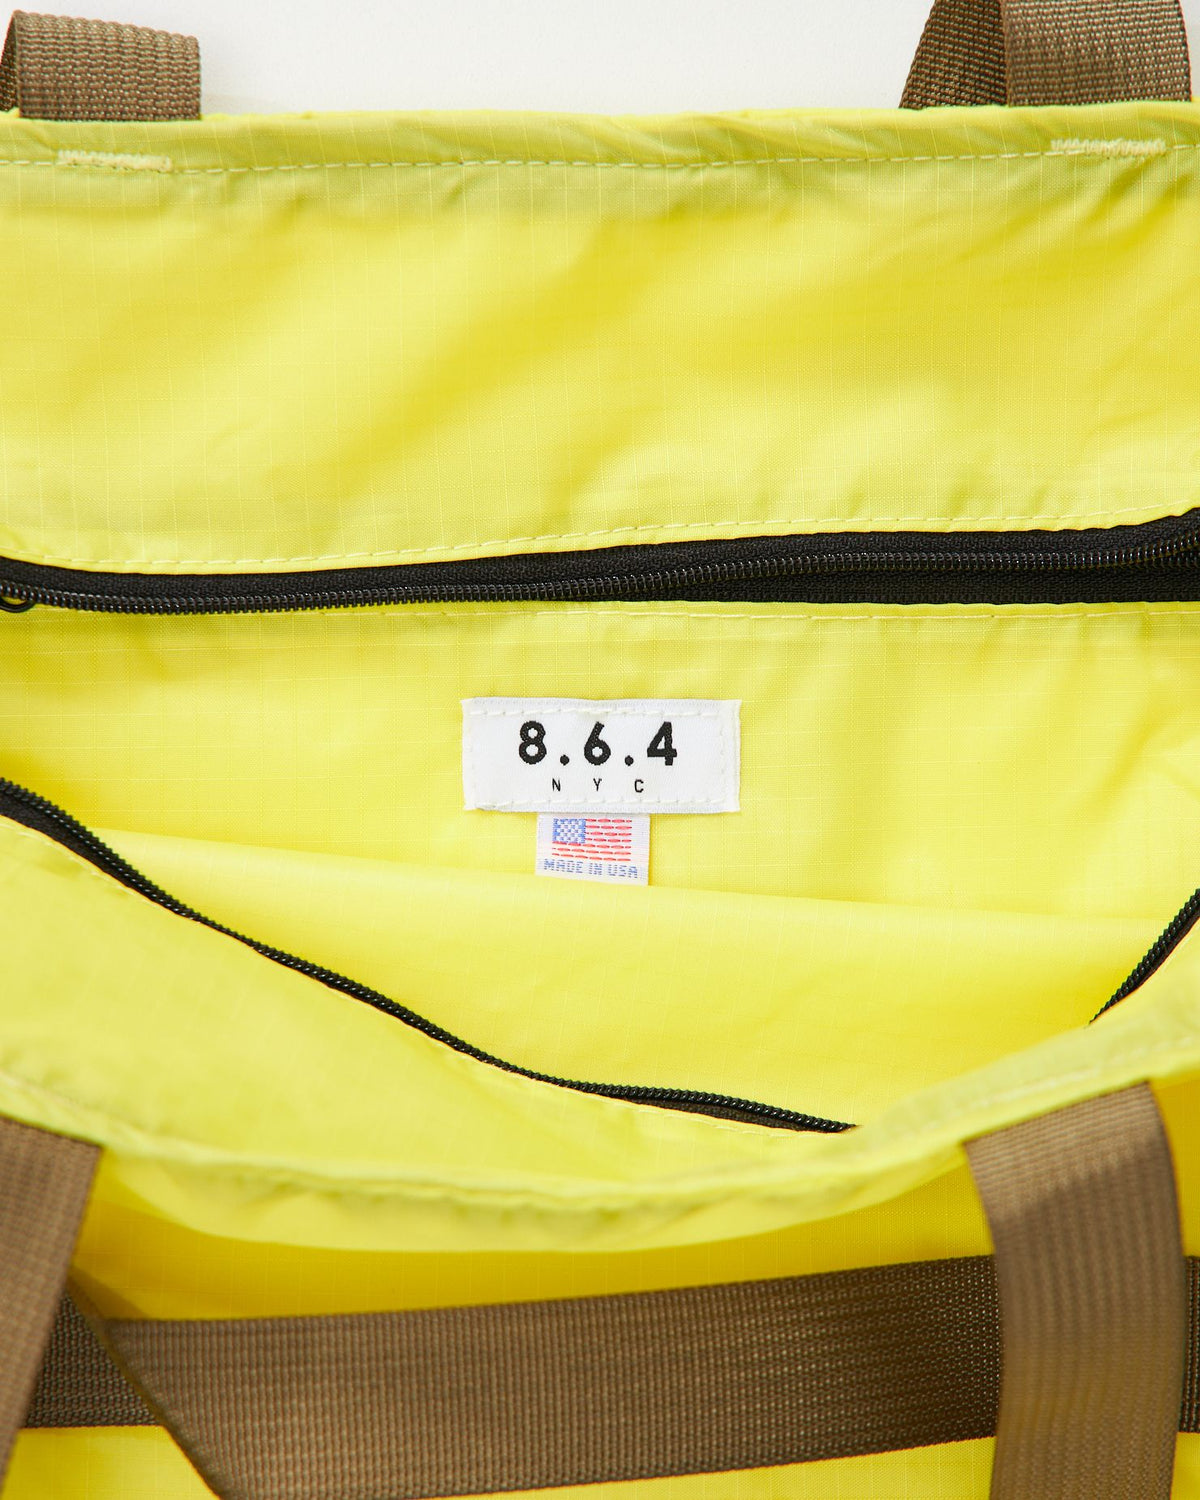 Nylon 2 Way Bag in Yellow/Coyote